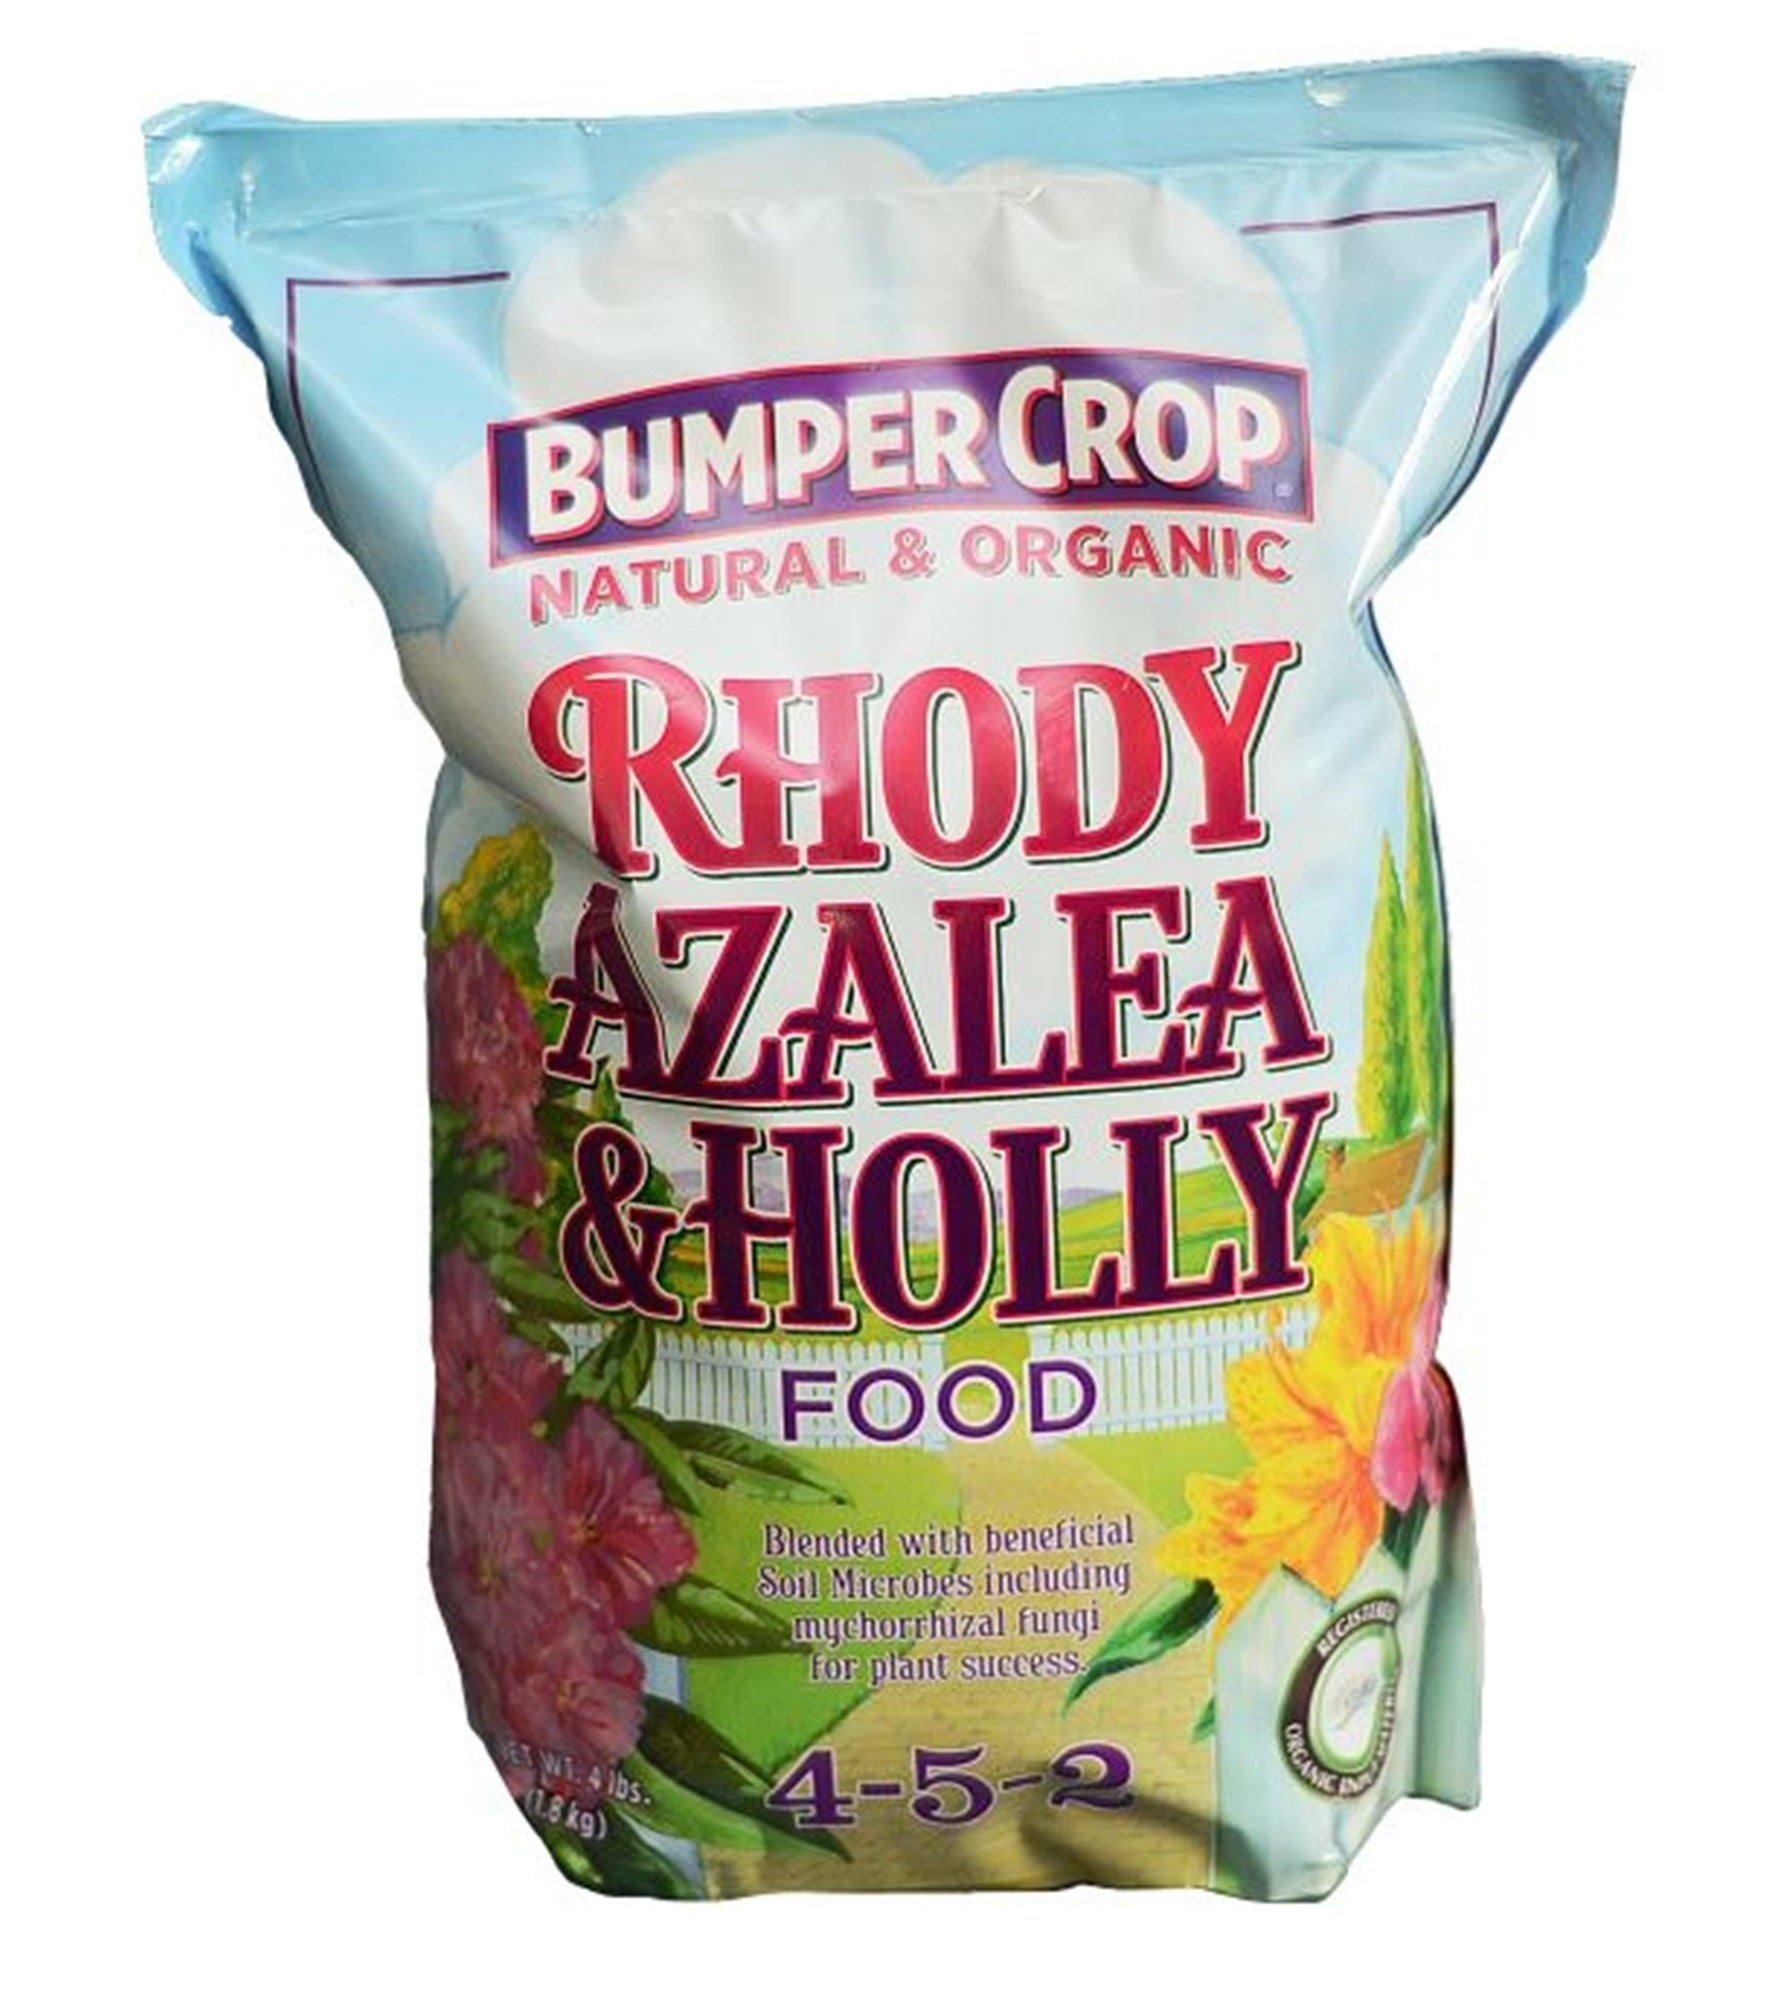 Bumper Crop Natural and Organic Rhody, Azalea & Holly Food 4-5-2, 12lb Bag